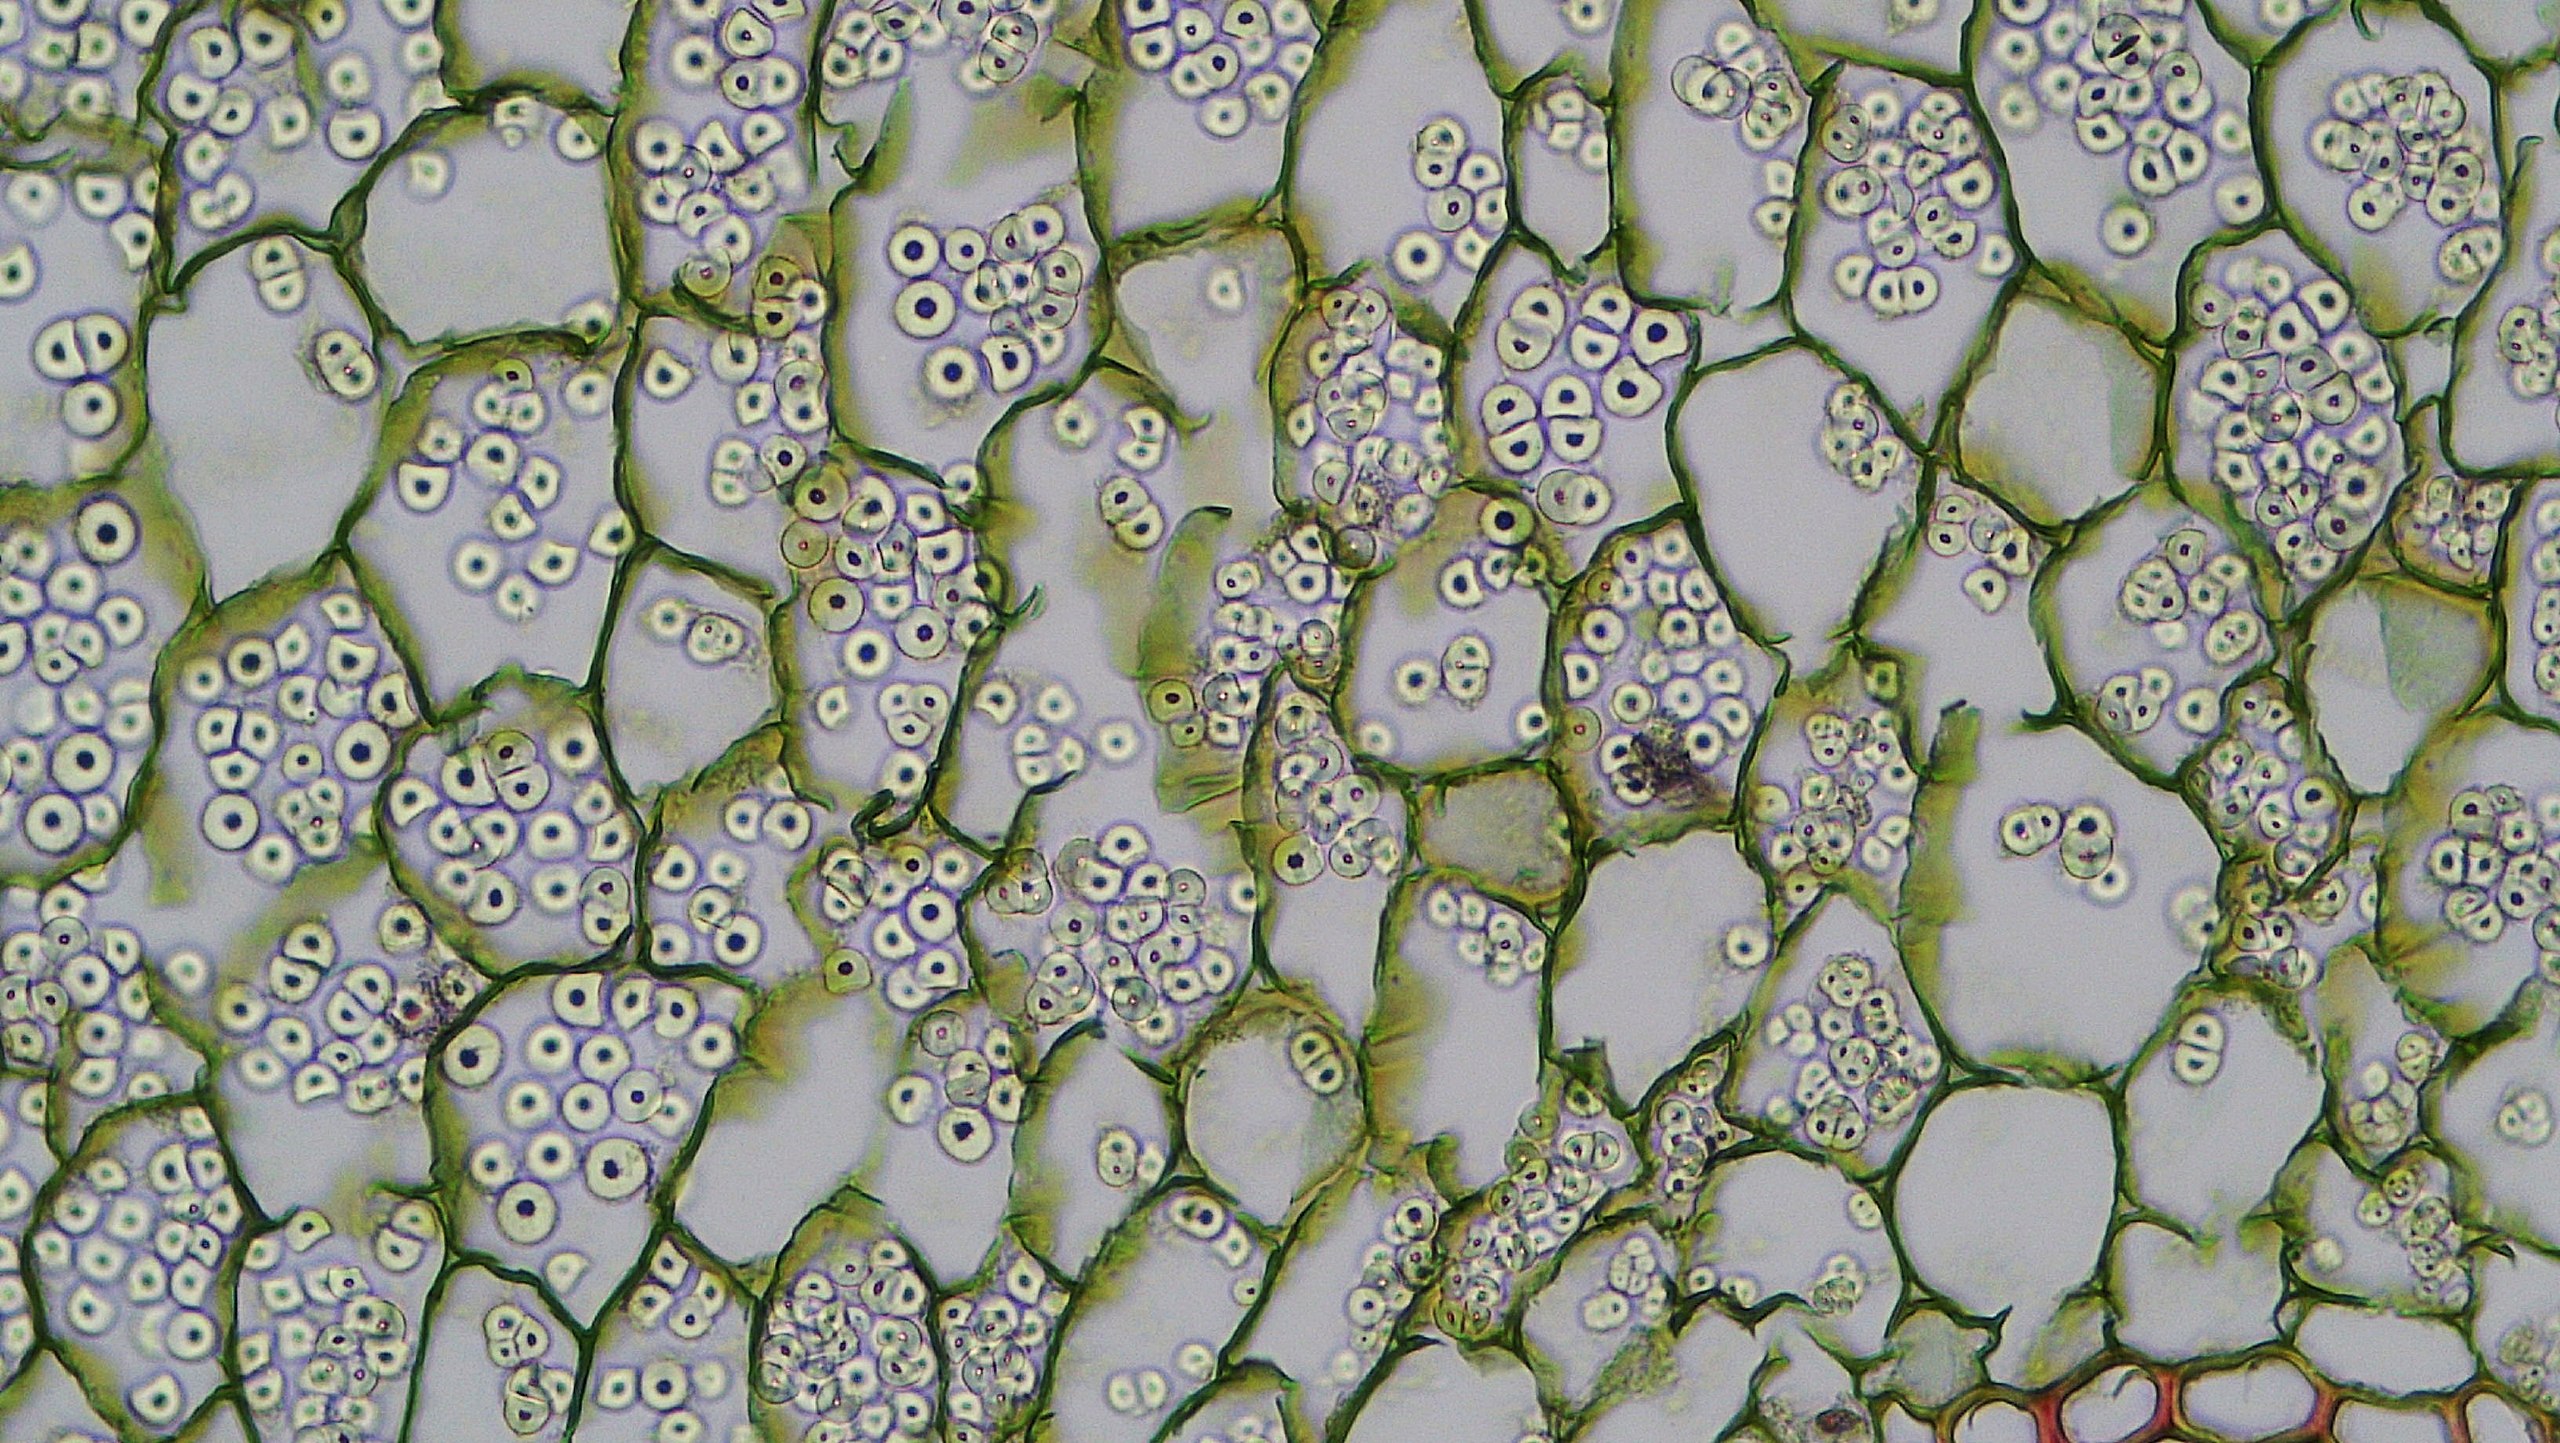 Muchas células se empaquetan estrechamente junto con paredes celulares delgadas. Las celdas contienen estructuras redondas.